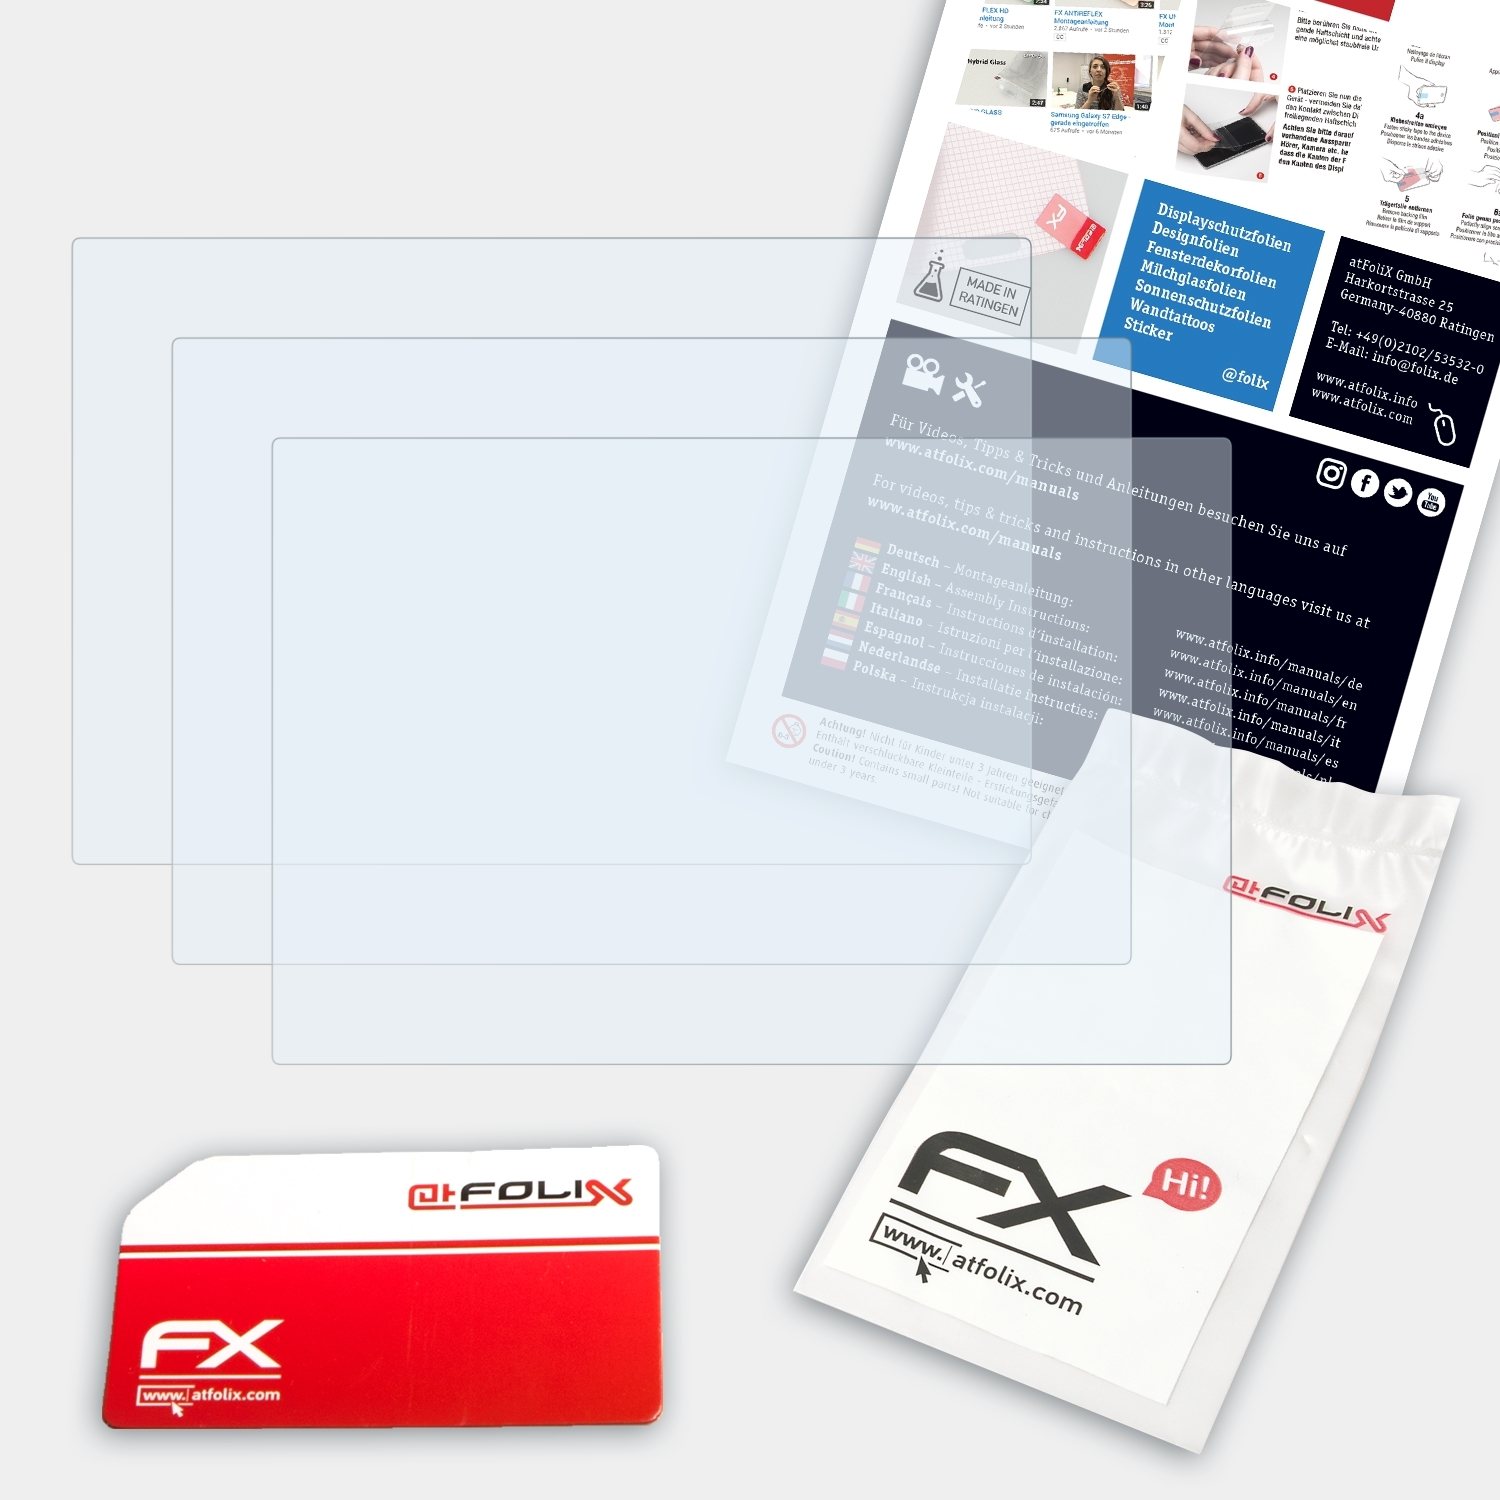 ATFOLIX 3x FX-Clear Displayschutz(für Fujifilm X-T2)